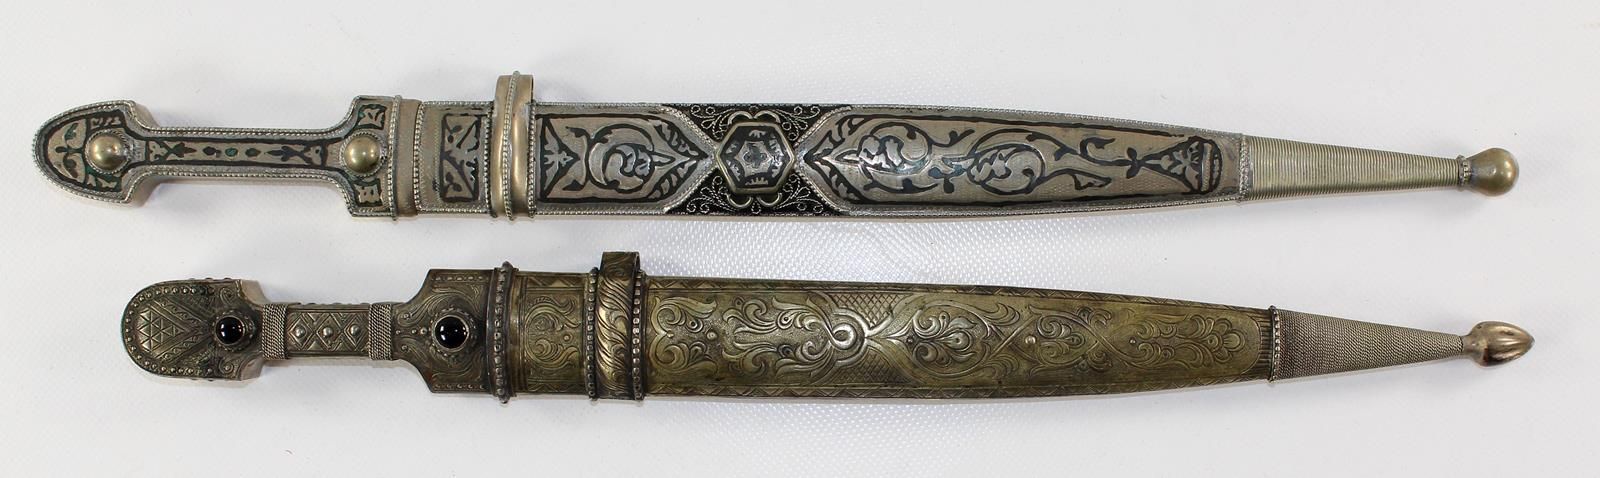 Dolche/Kurzschwerter 亚洲。可能是19/20世纪，双刃刀，刀柄和刀鞘上有丰富的装饰。19/20世纪。45 - 47厘米。鎏金片，有单字。"A&hellip;